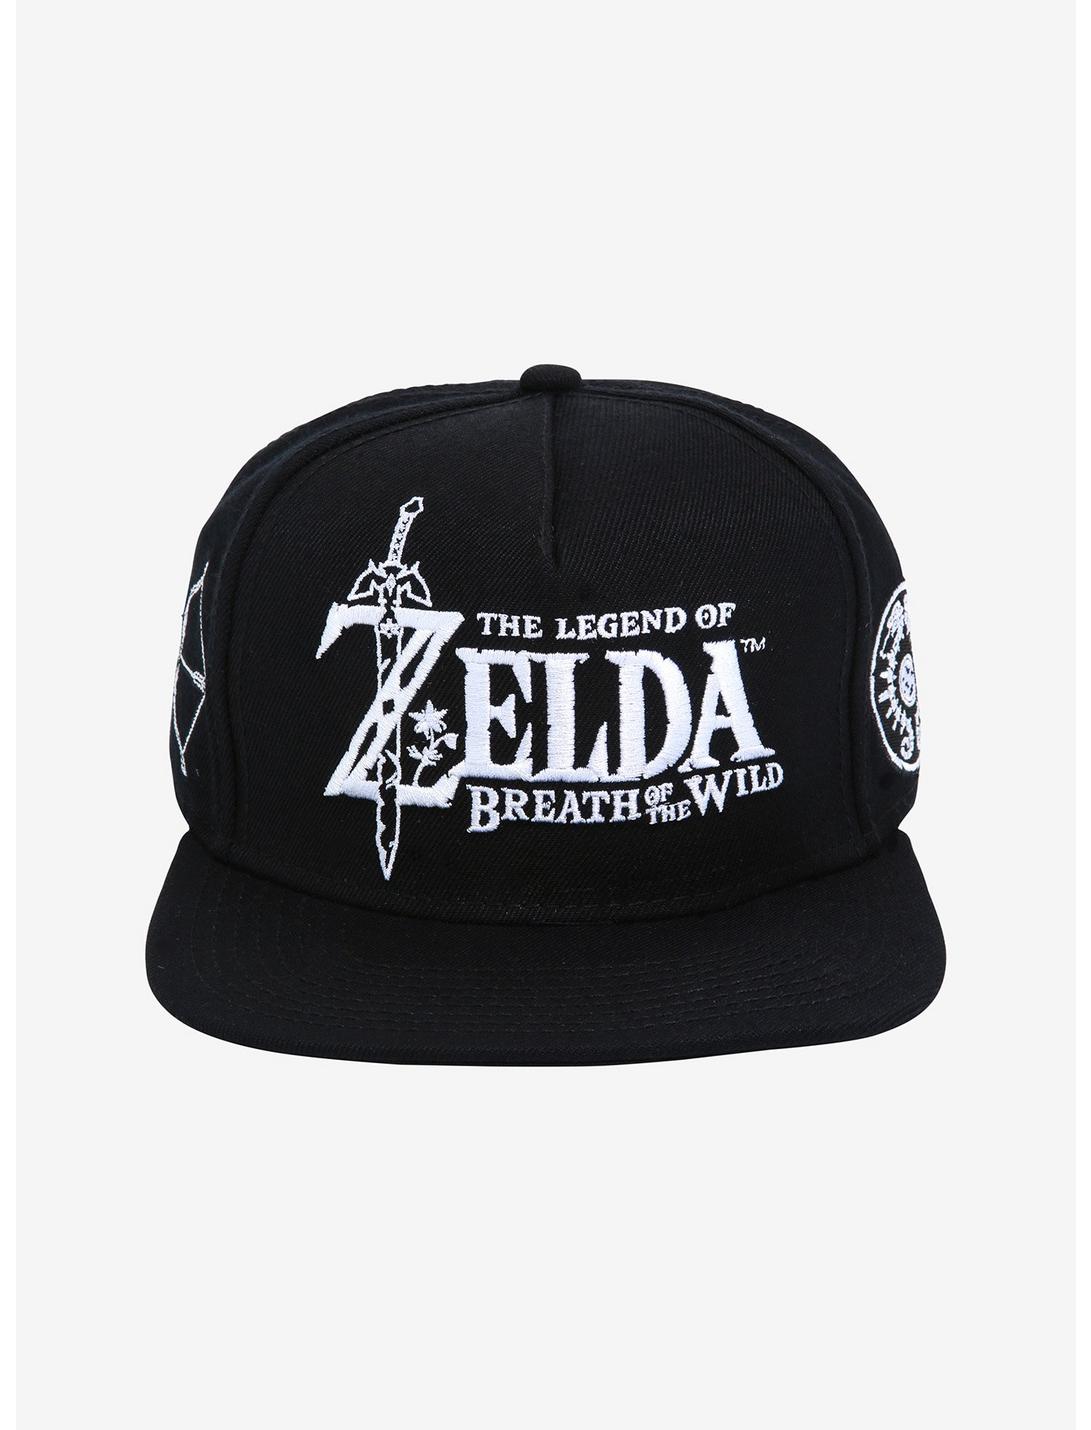 The Legend Of Zelda: Breath Of The Wild Black & White Snapback Hat